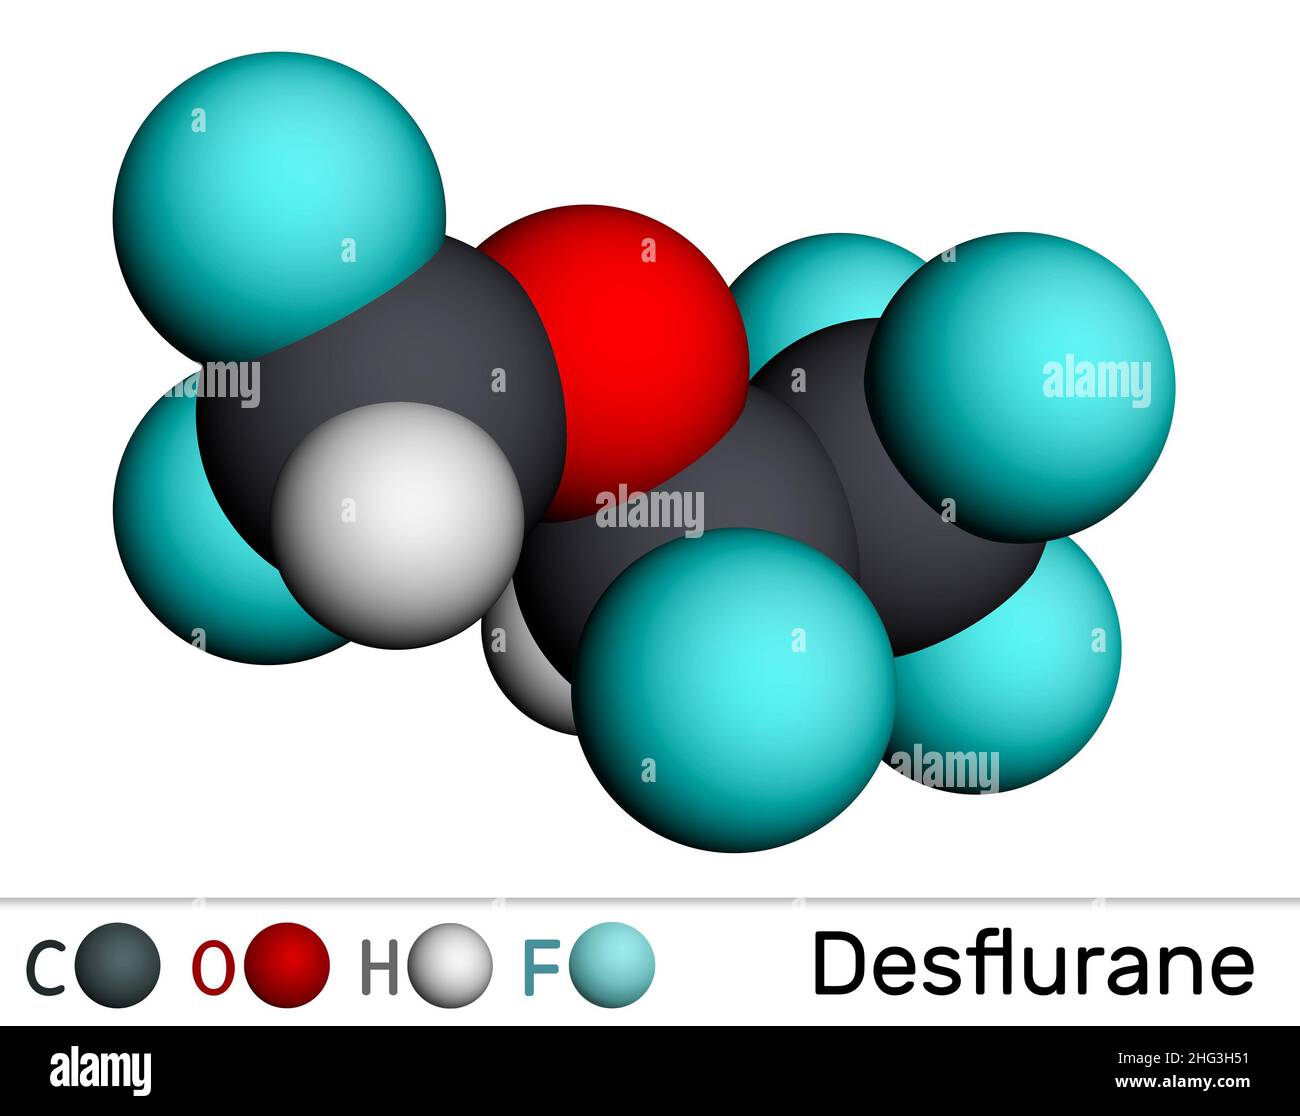 Desflurane molecule. It is organofluorine compound, inhalation anaesthetic. Molecular model. 3D rendering. Illustration Stock Photo